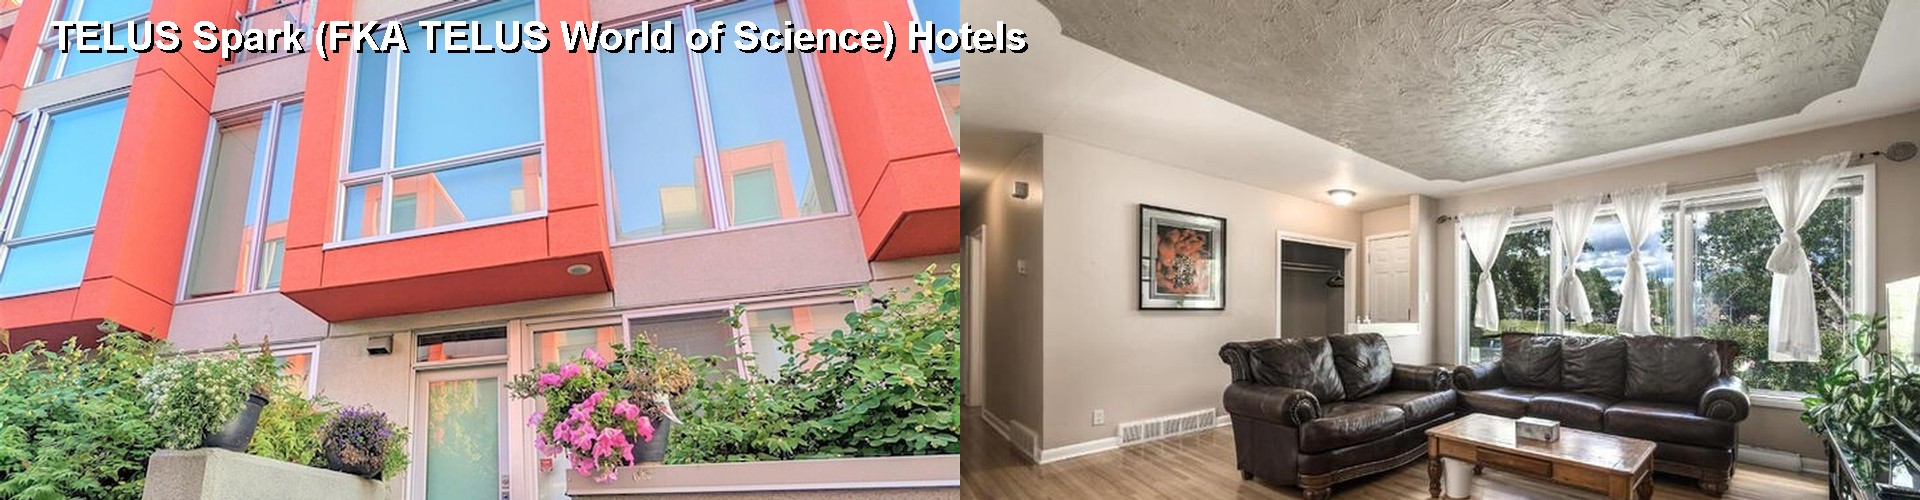 5 Best Hotels near TELUS Spark (FKA TELUS World of Science)